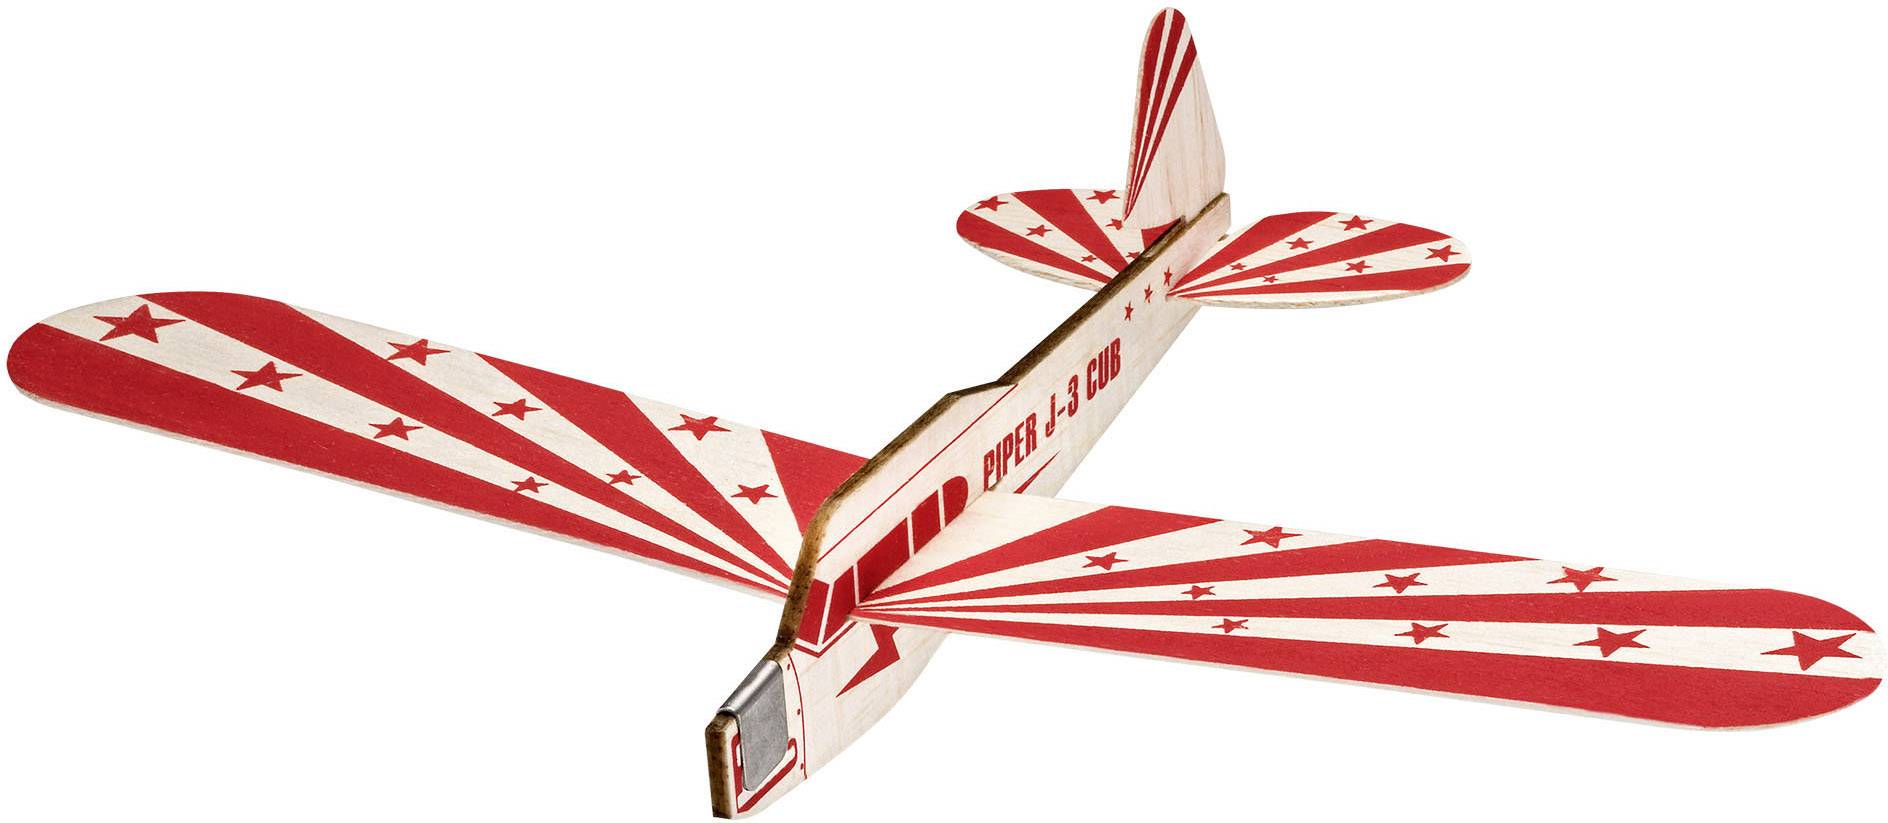 Revell 24312 BalsaBirds Jet Glider   NEUHEIT 2019 OVP,